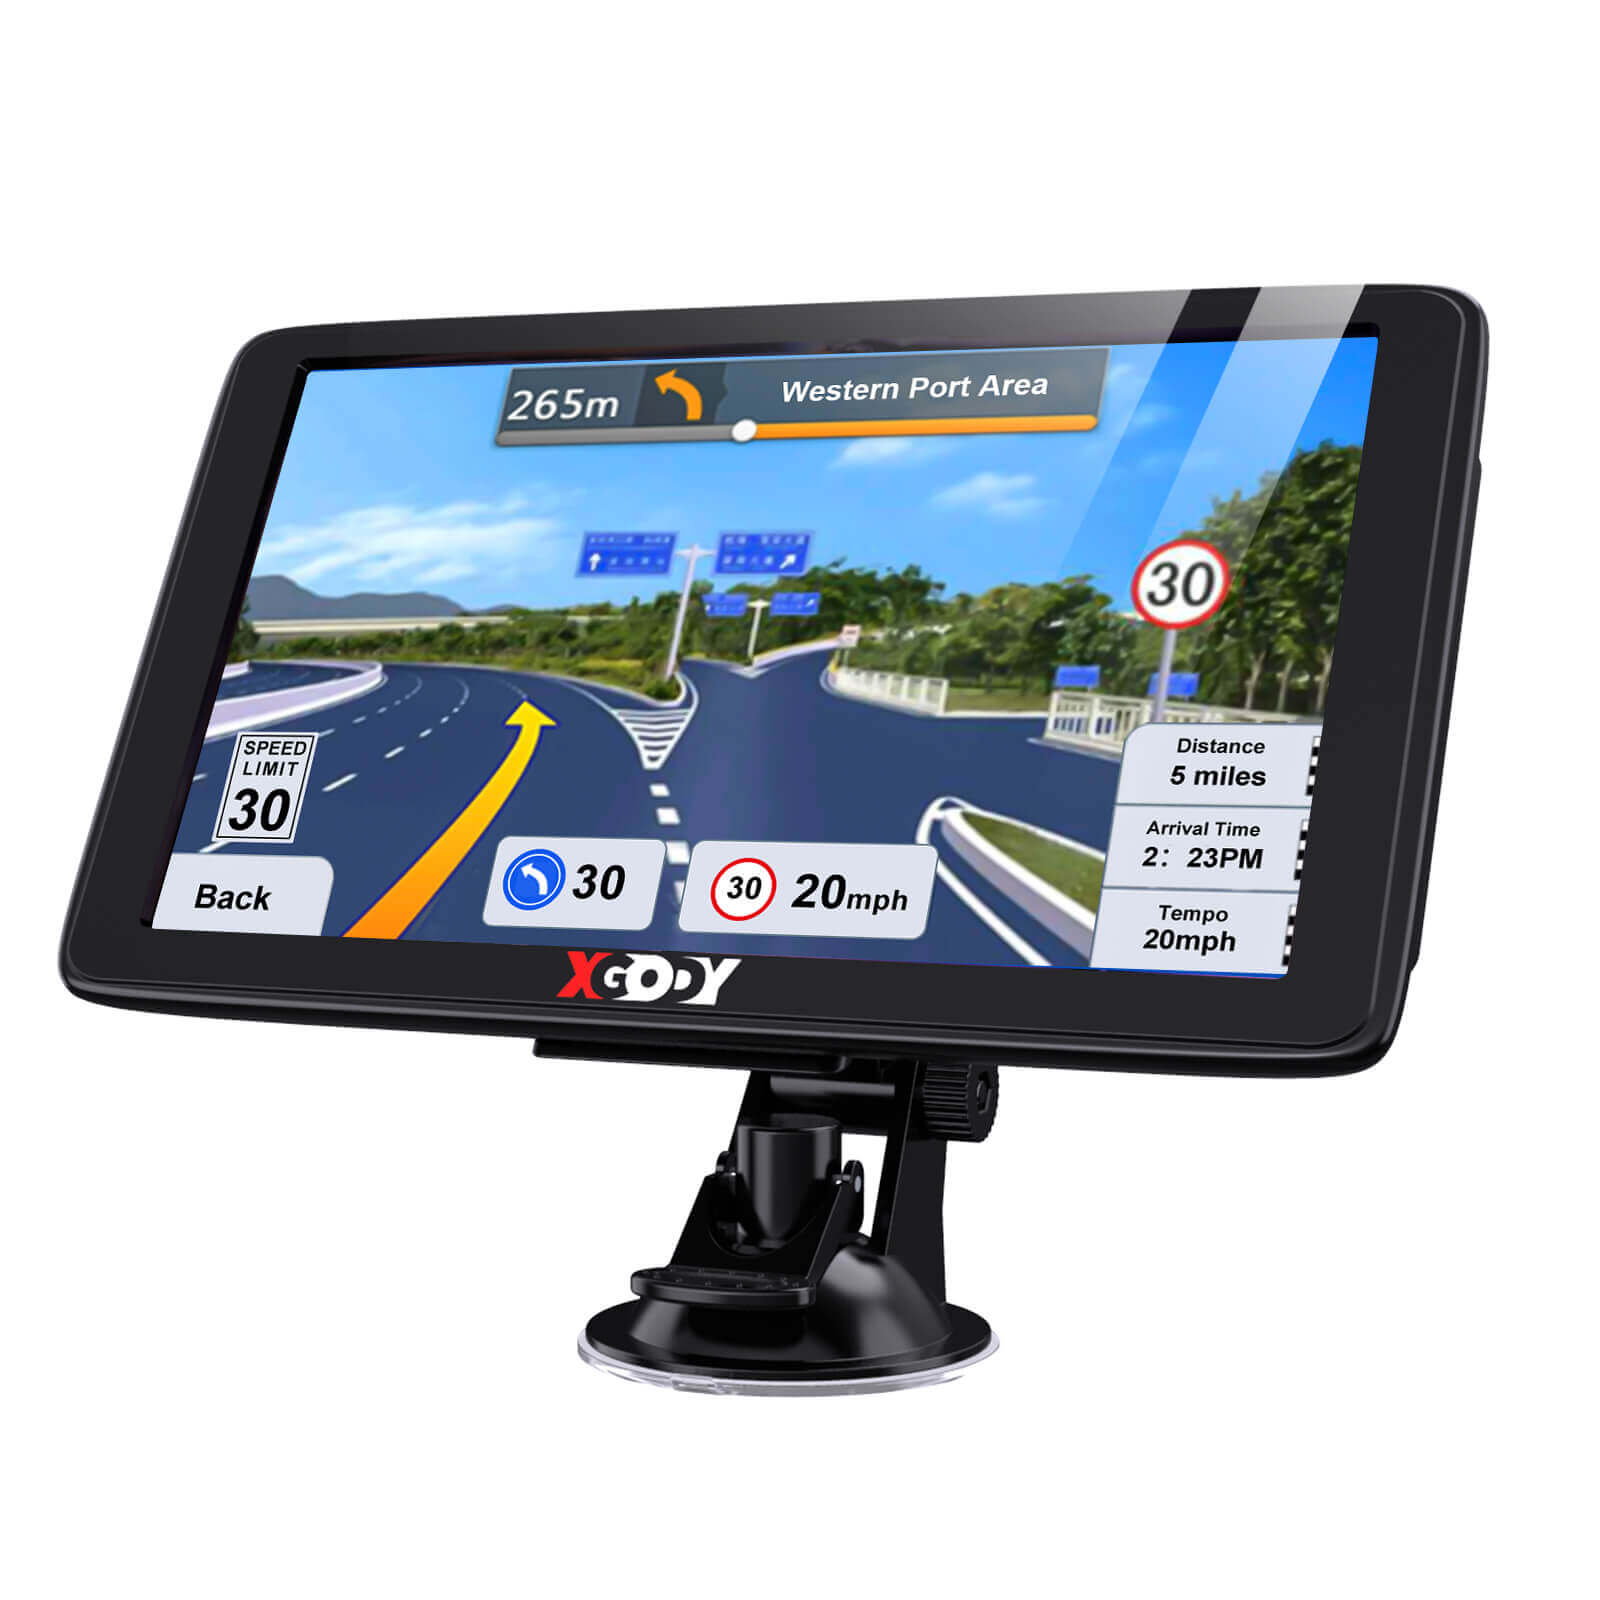 XGODY J727 Truck 7inch Sat Nav GPS with Bluetooth AV-in Navigation System for Car